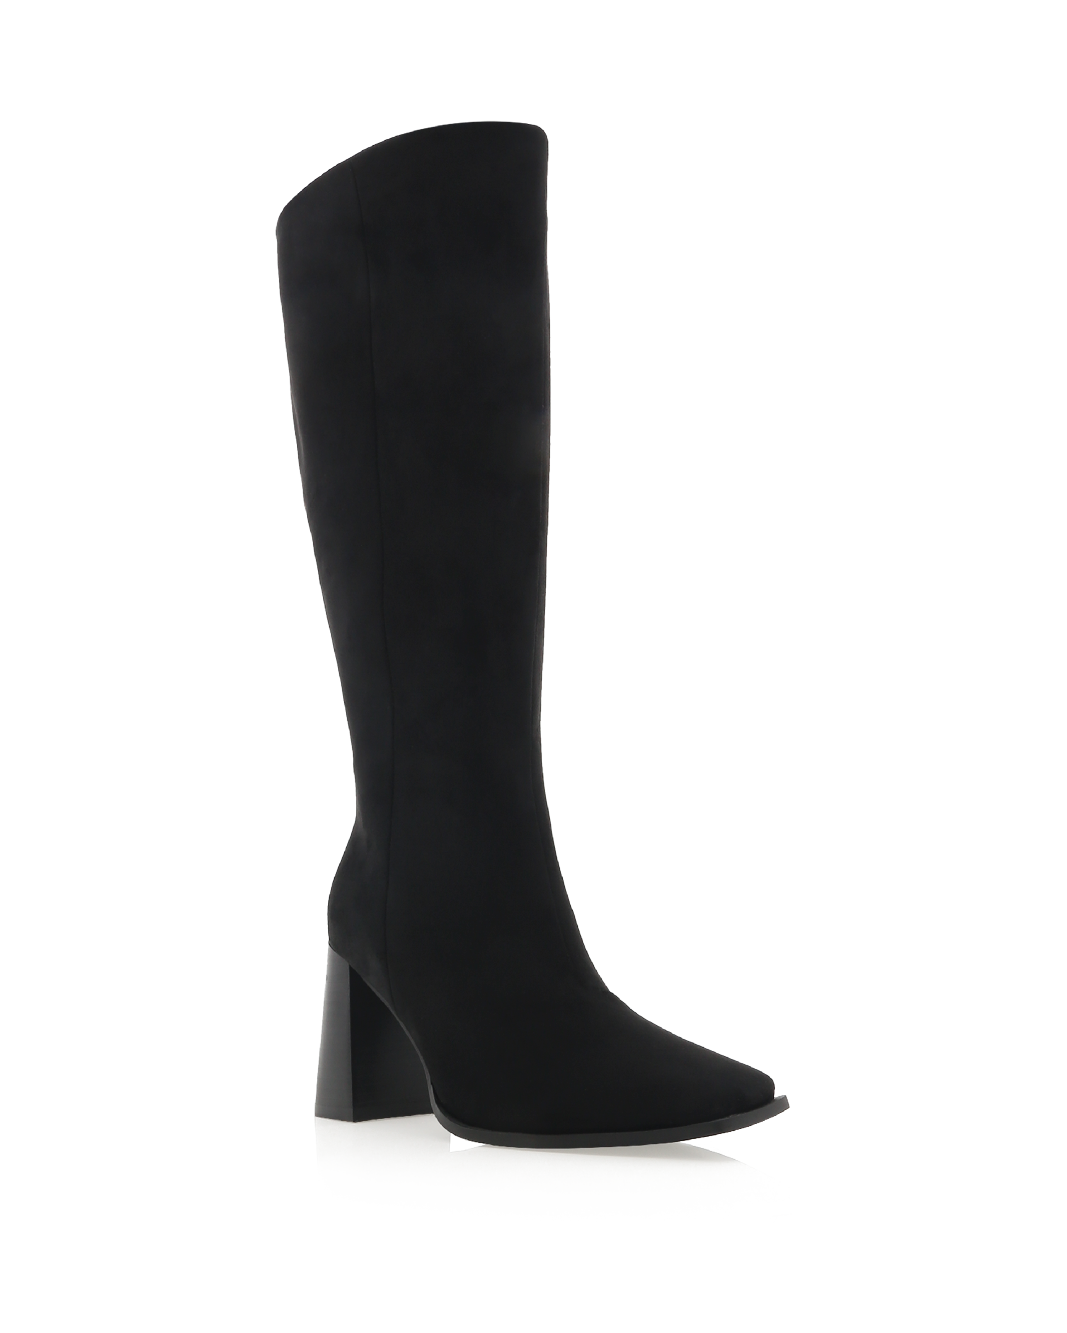 CASTON CURVE - BLACK SUEDE-Boots-Billini-Billini